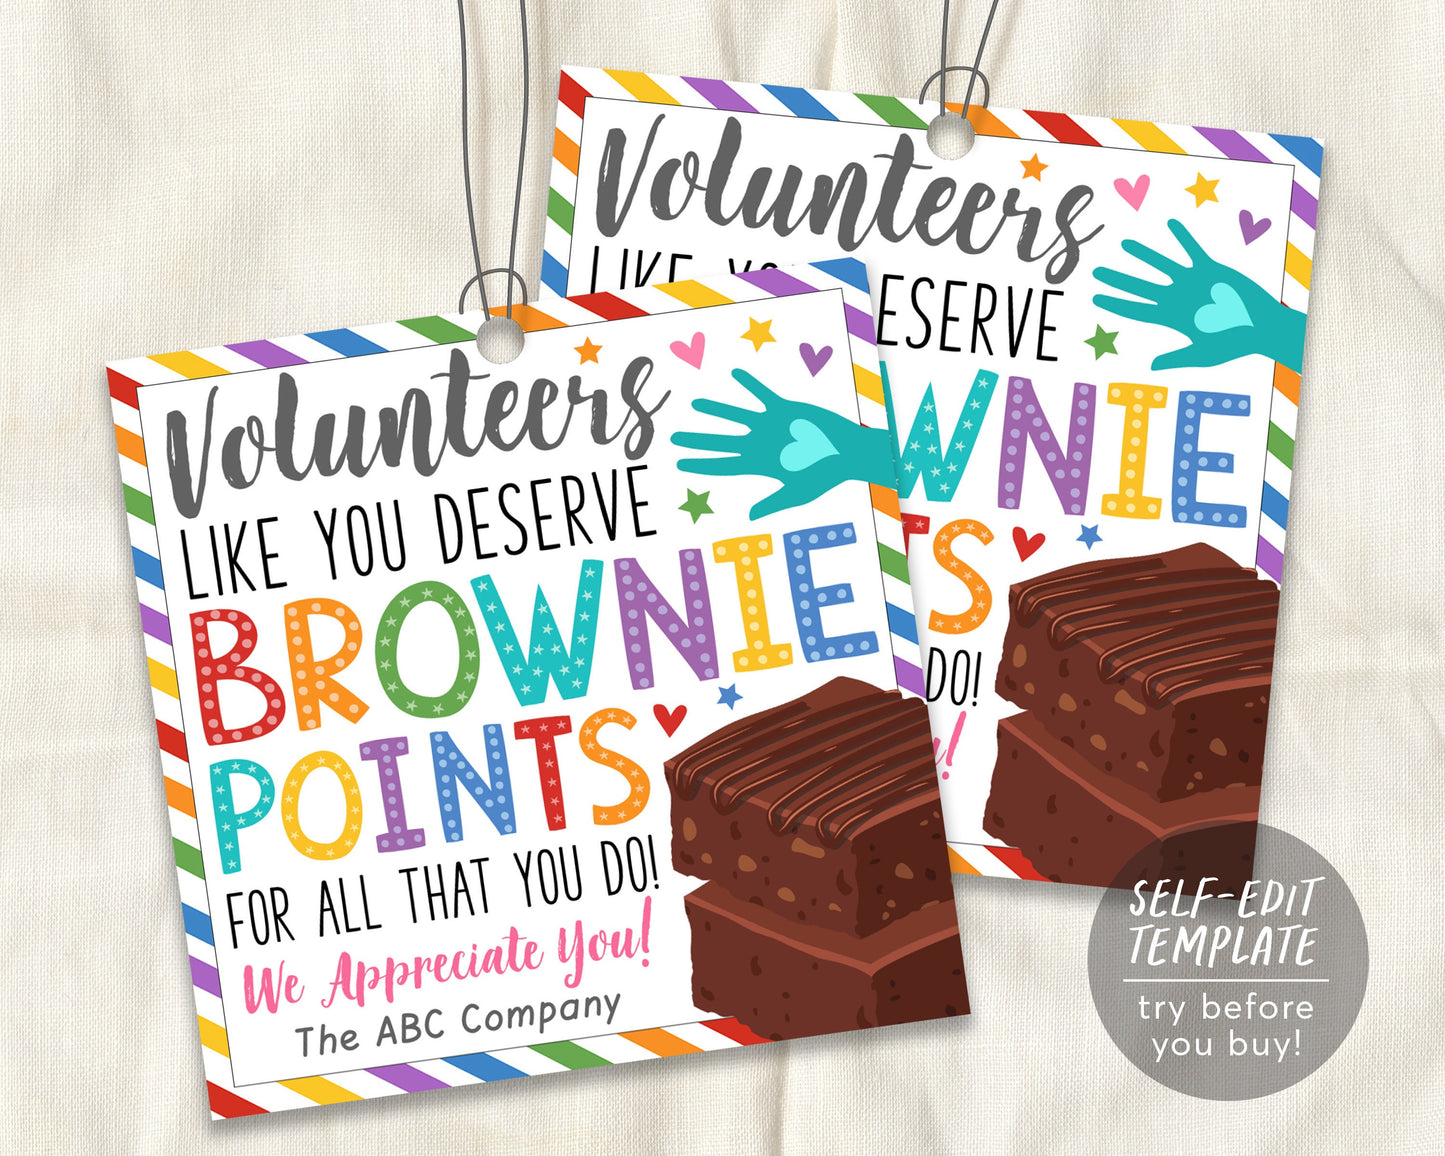 Brownie Volunteer Thank You Gift Tag Editable Template, Volunteers Deserve Brownie Points Chocolate Treat Tags, Community Appreciation Week